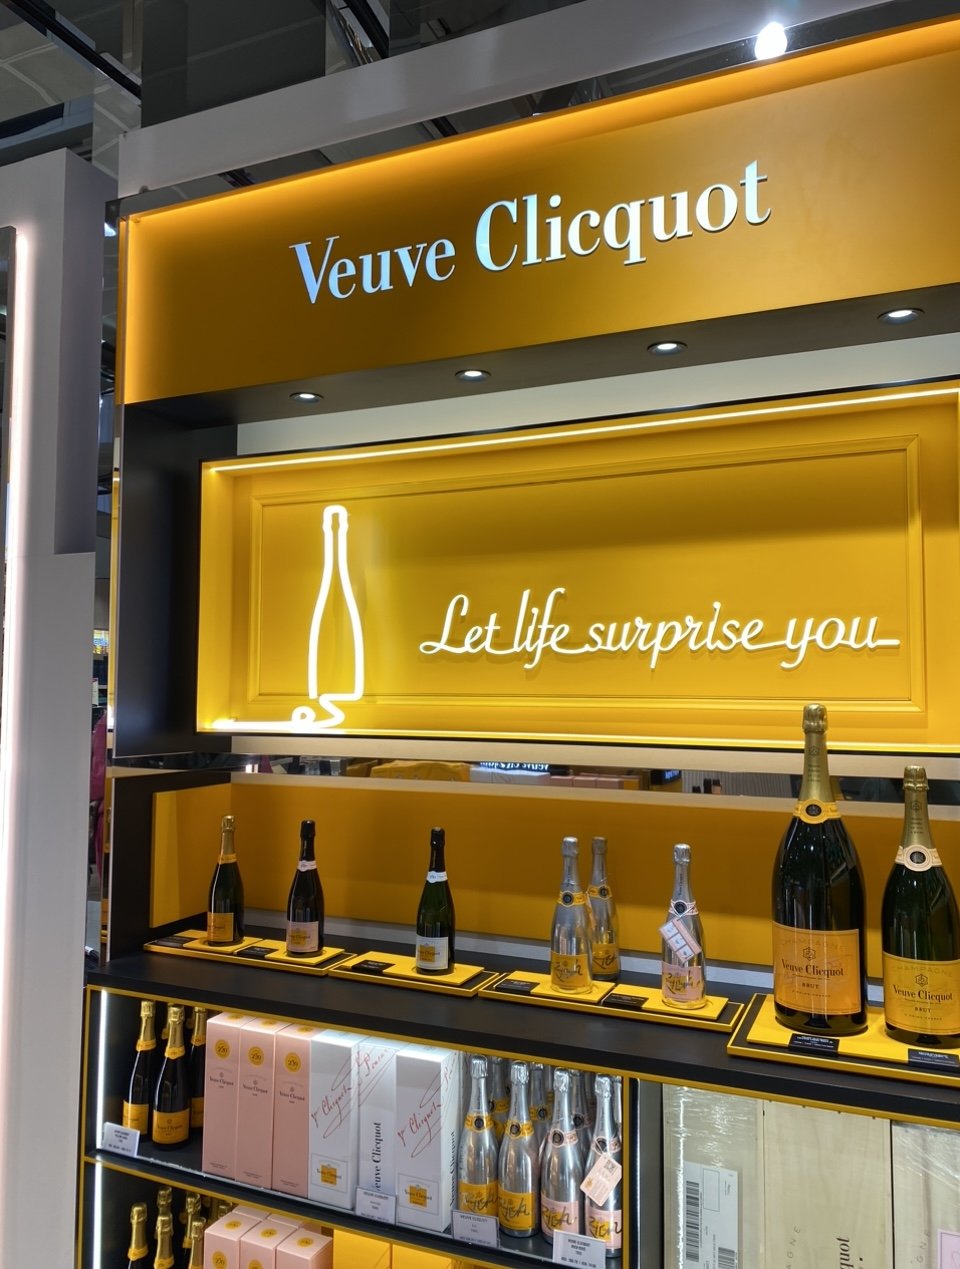 Veuve Clicquot hosted Lifestyle Influencers, Content Creators